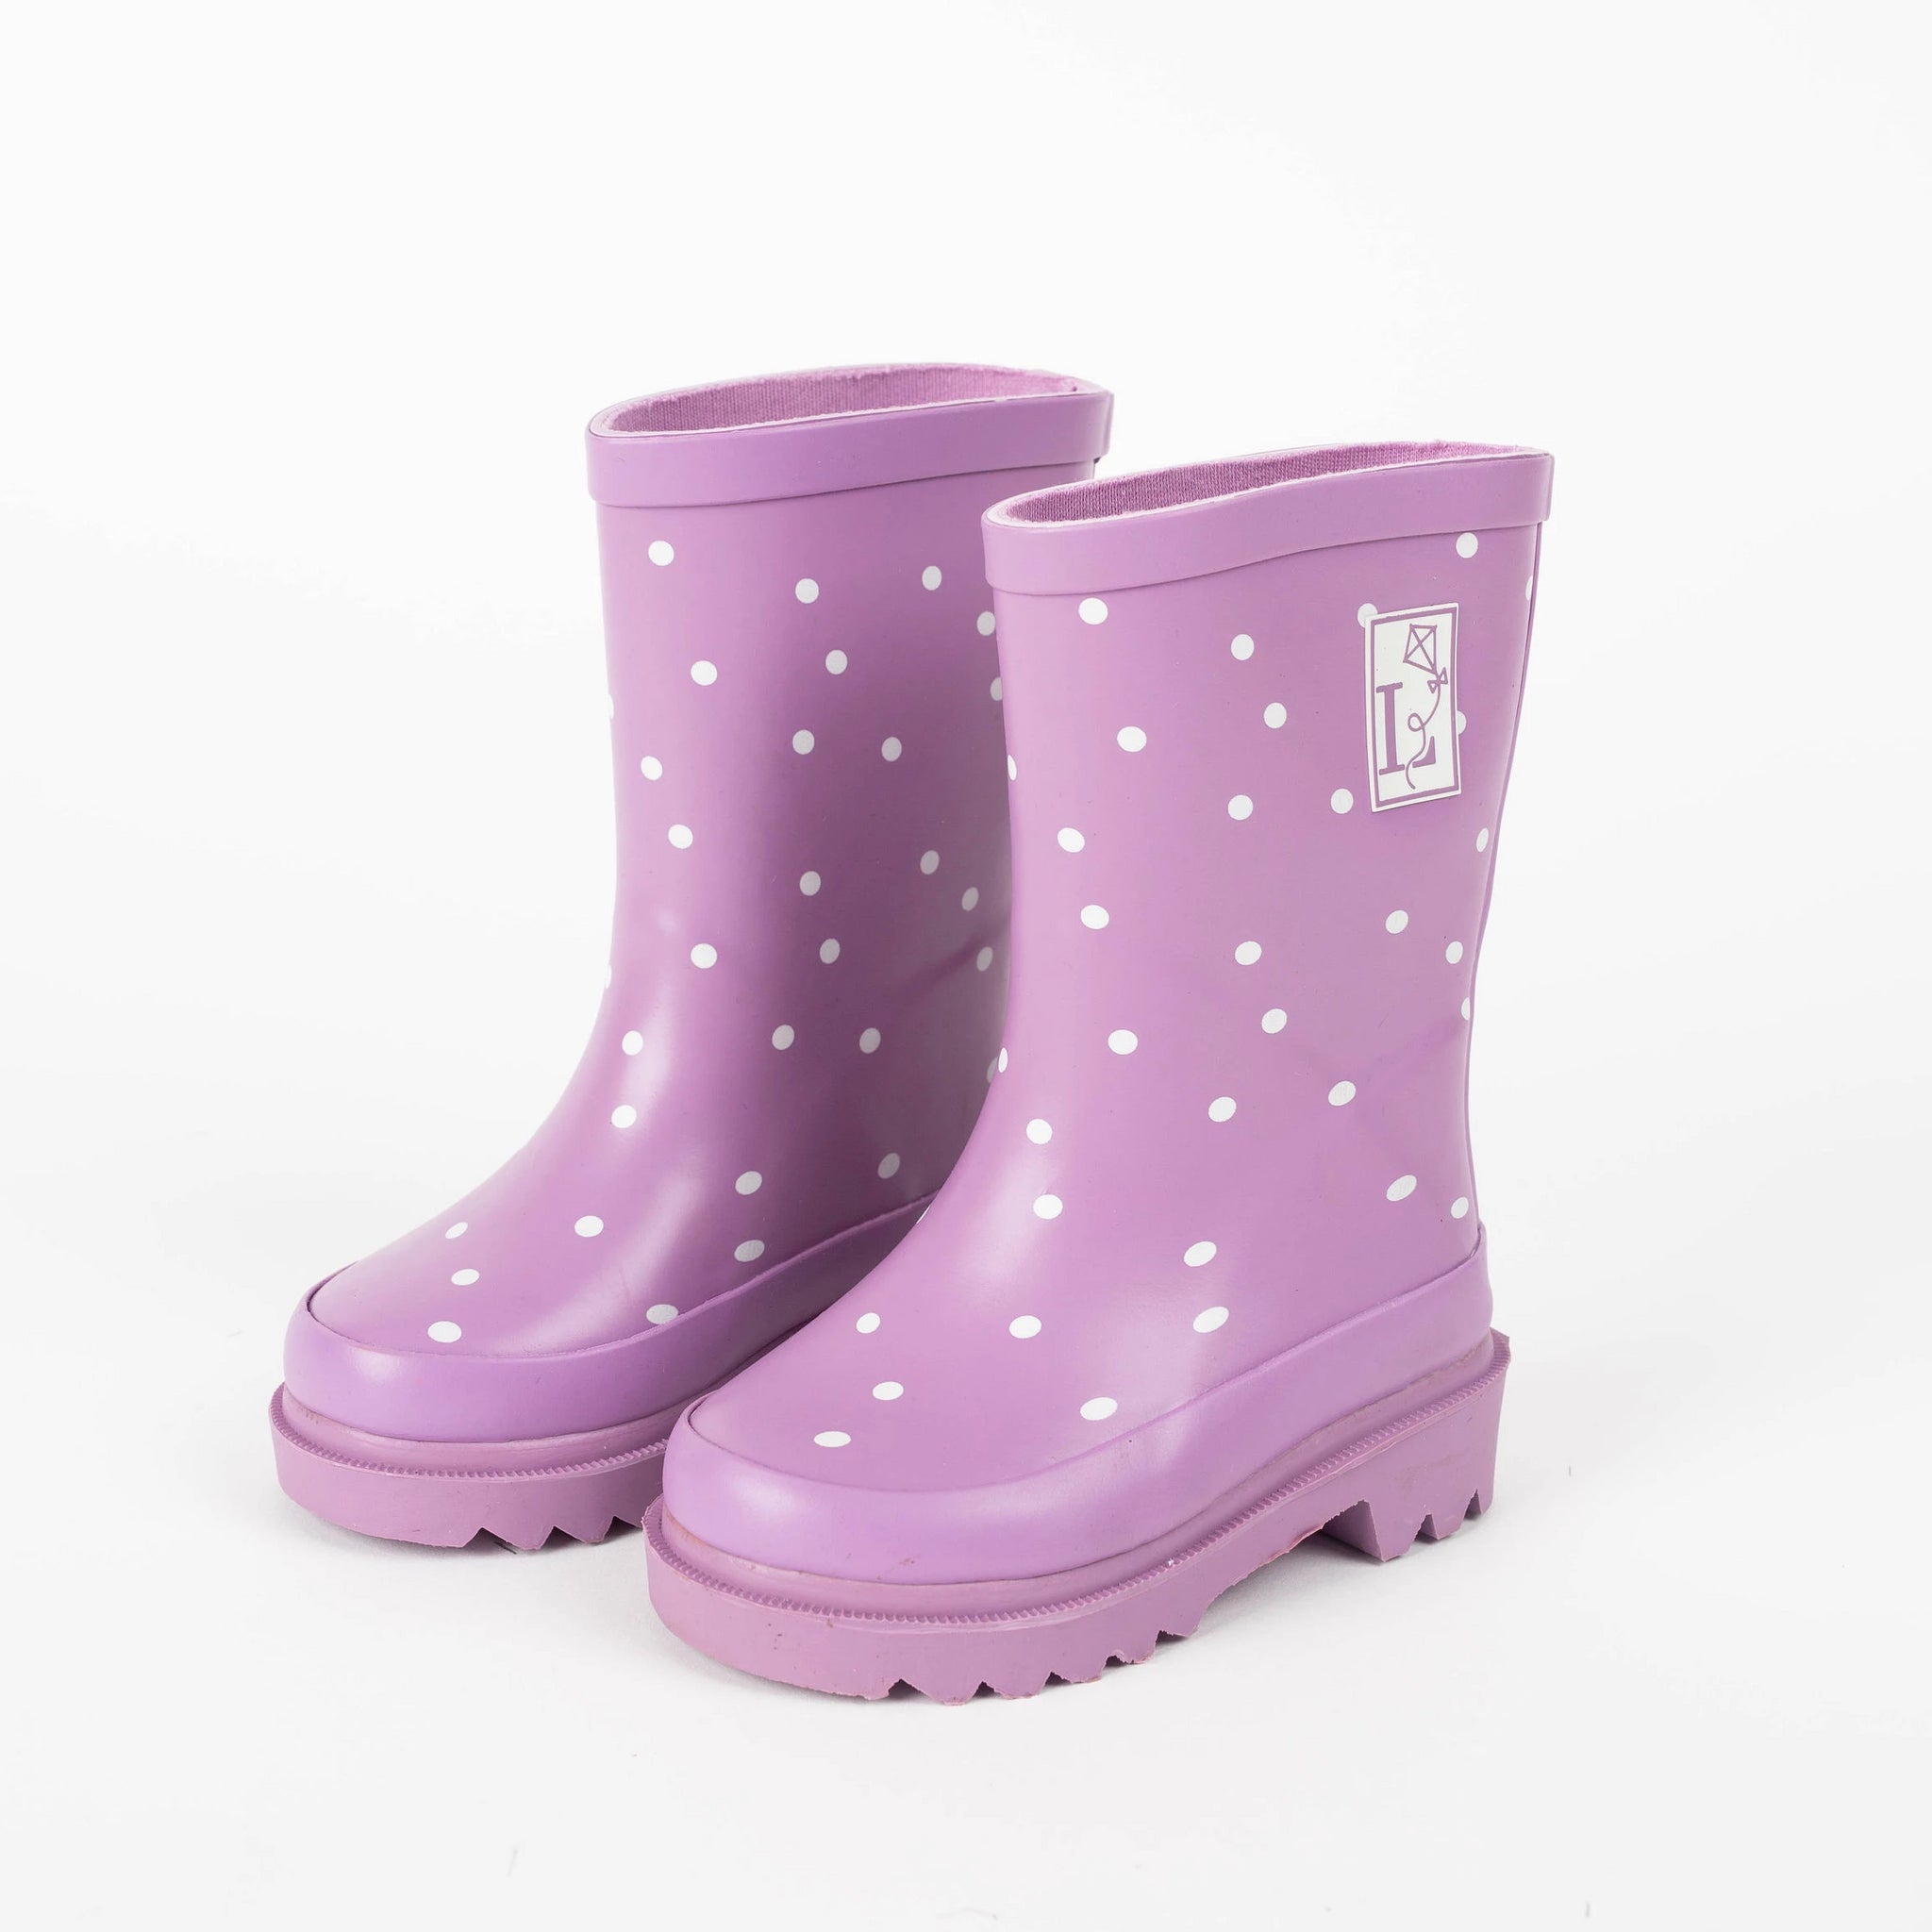 purple rain boots